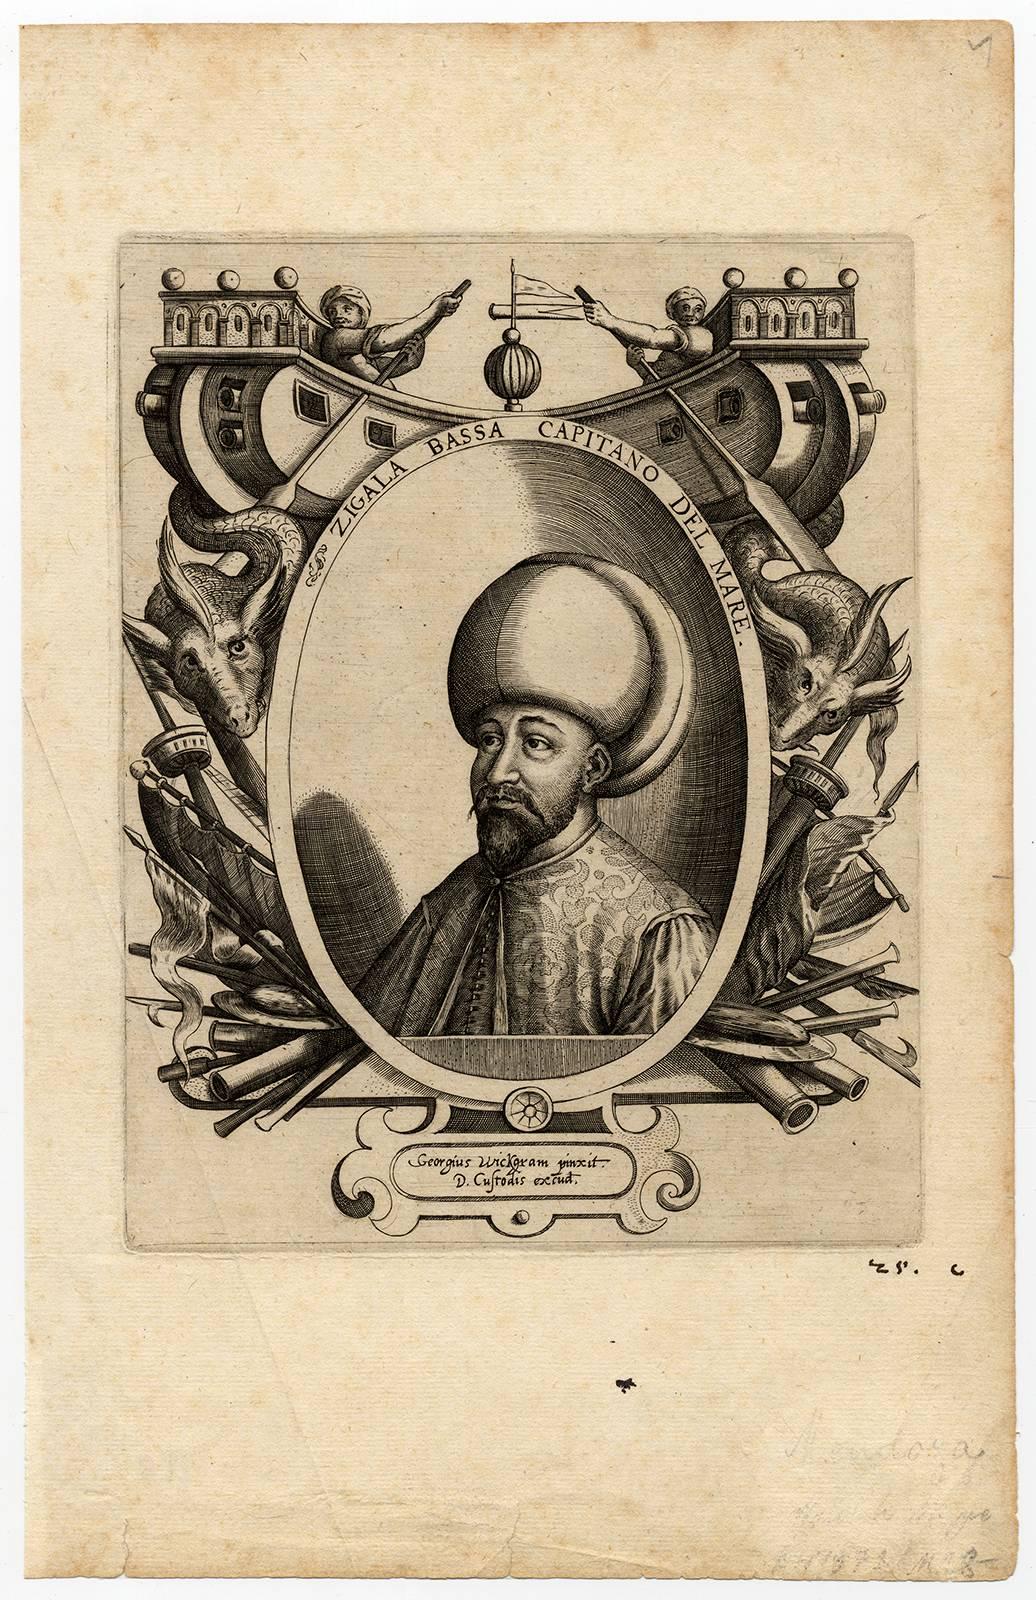 Domenicus Custos Portrait Print - Untitled - Zigala Bassa, portrait of an oriental naval captain in turban.